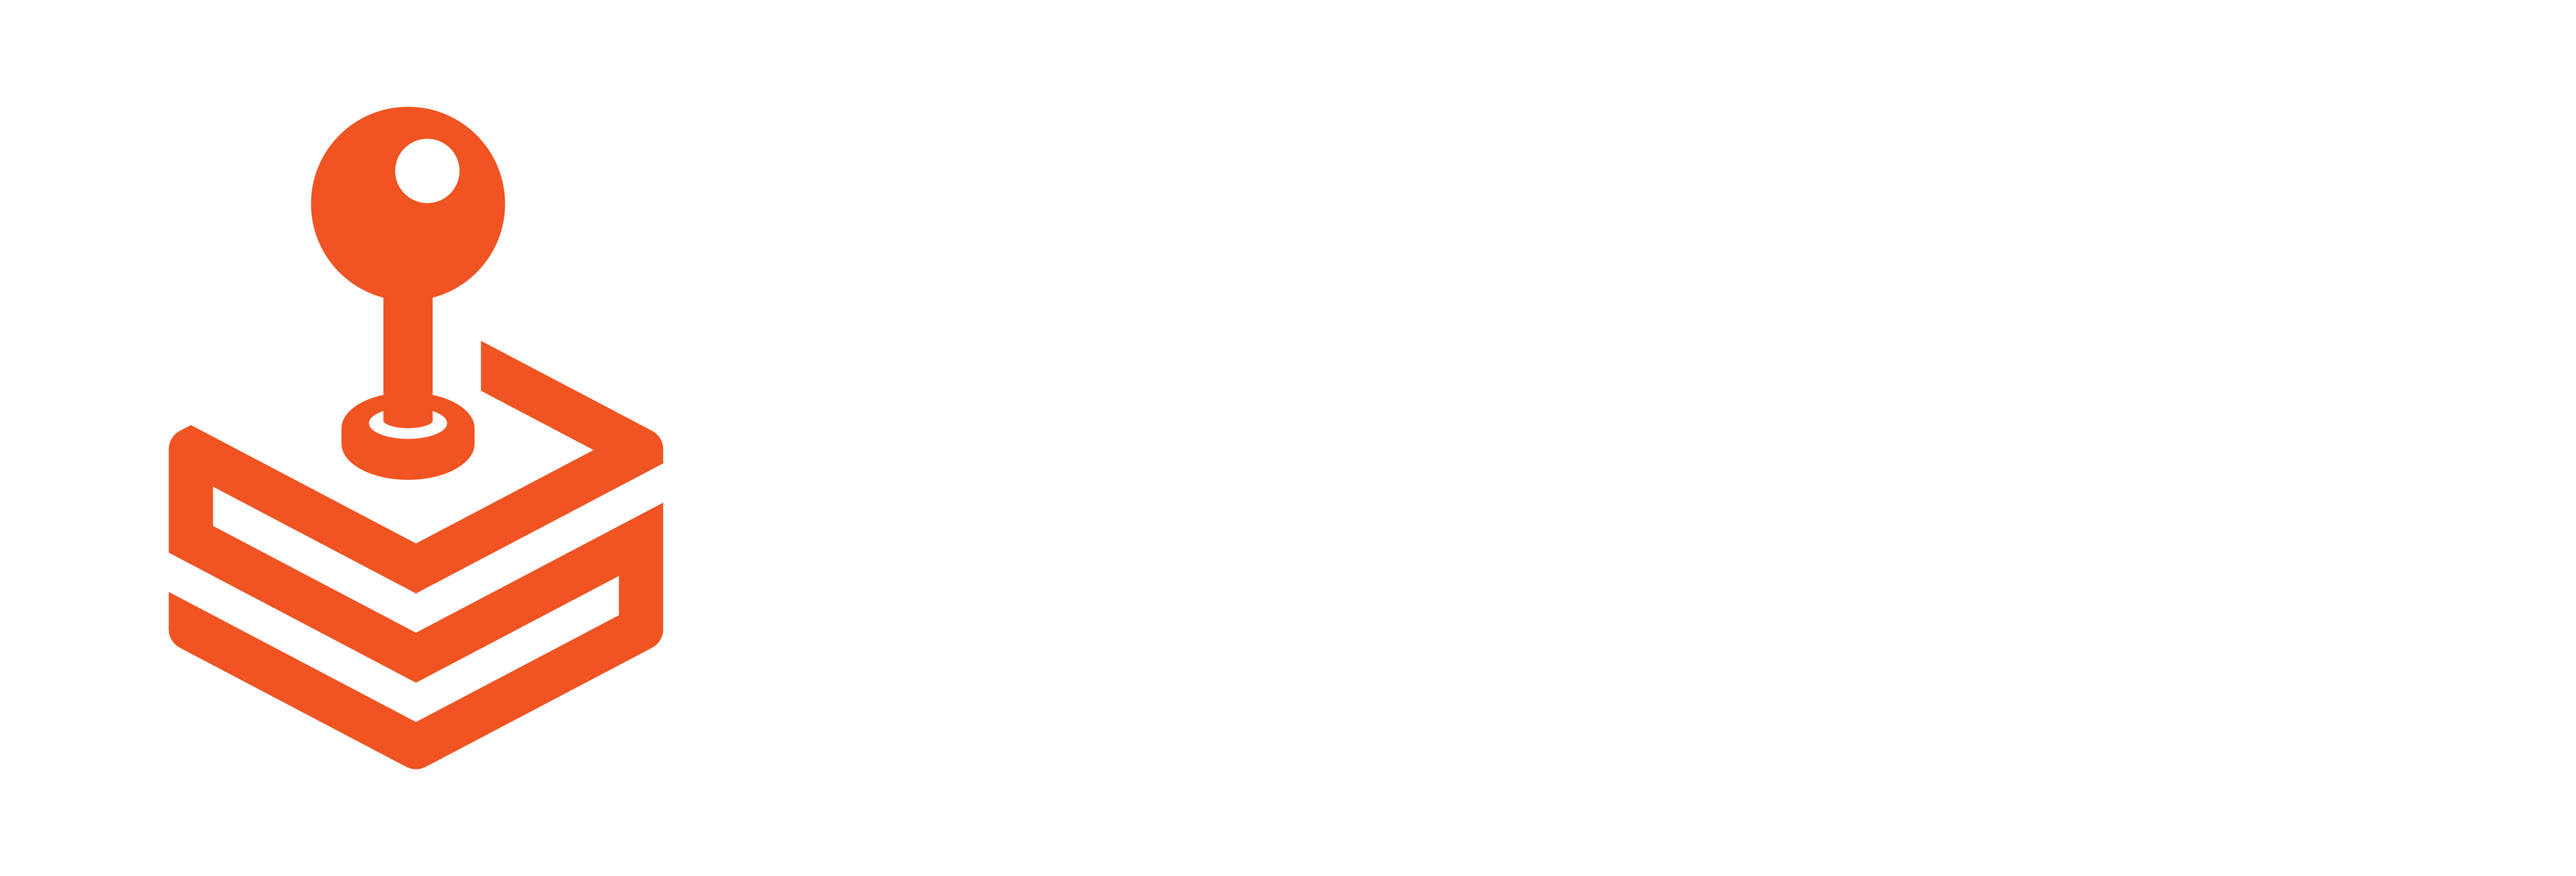 Joystack Logo